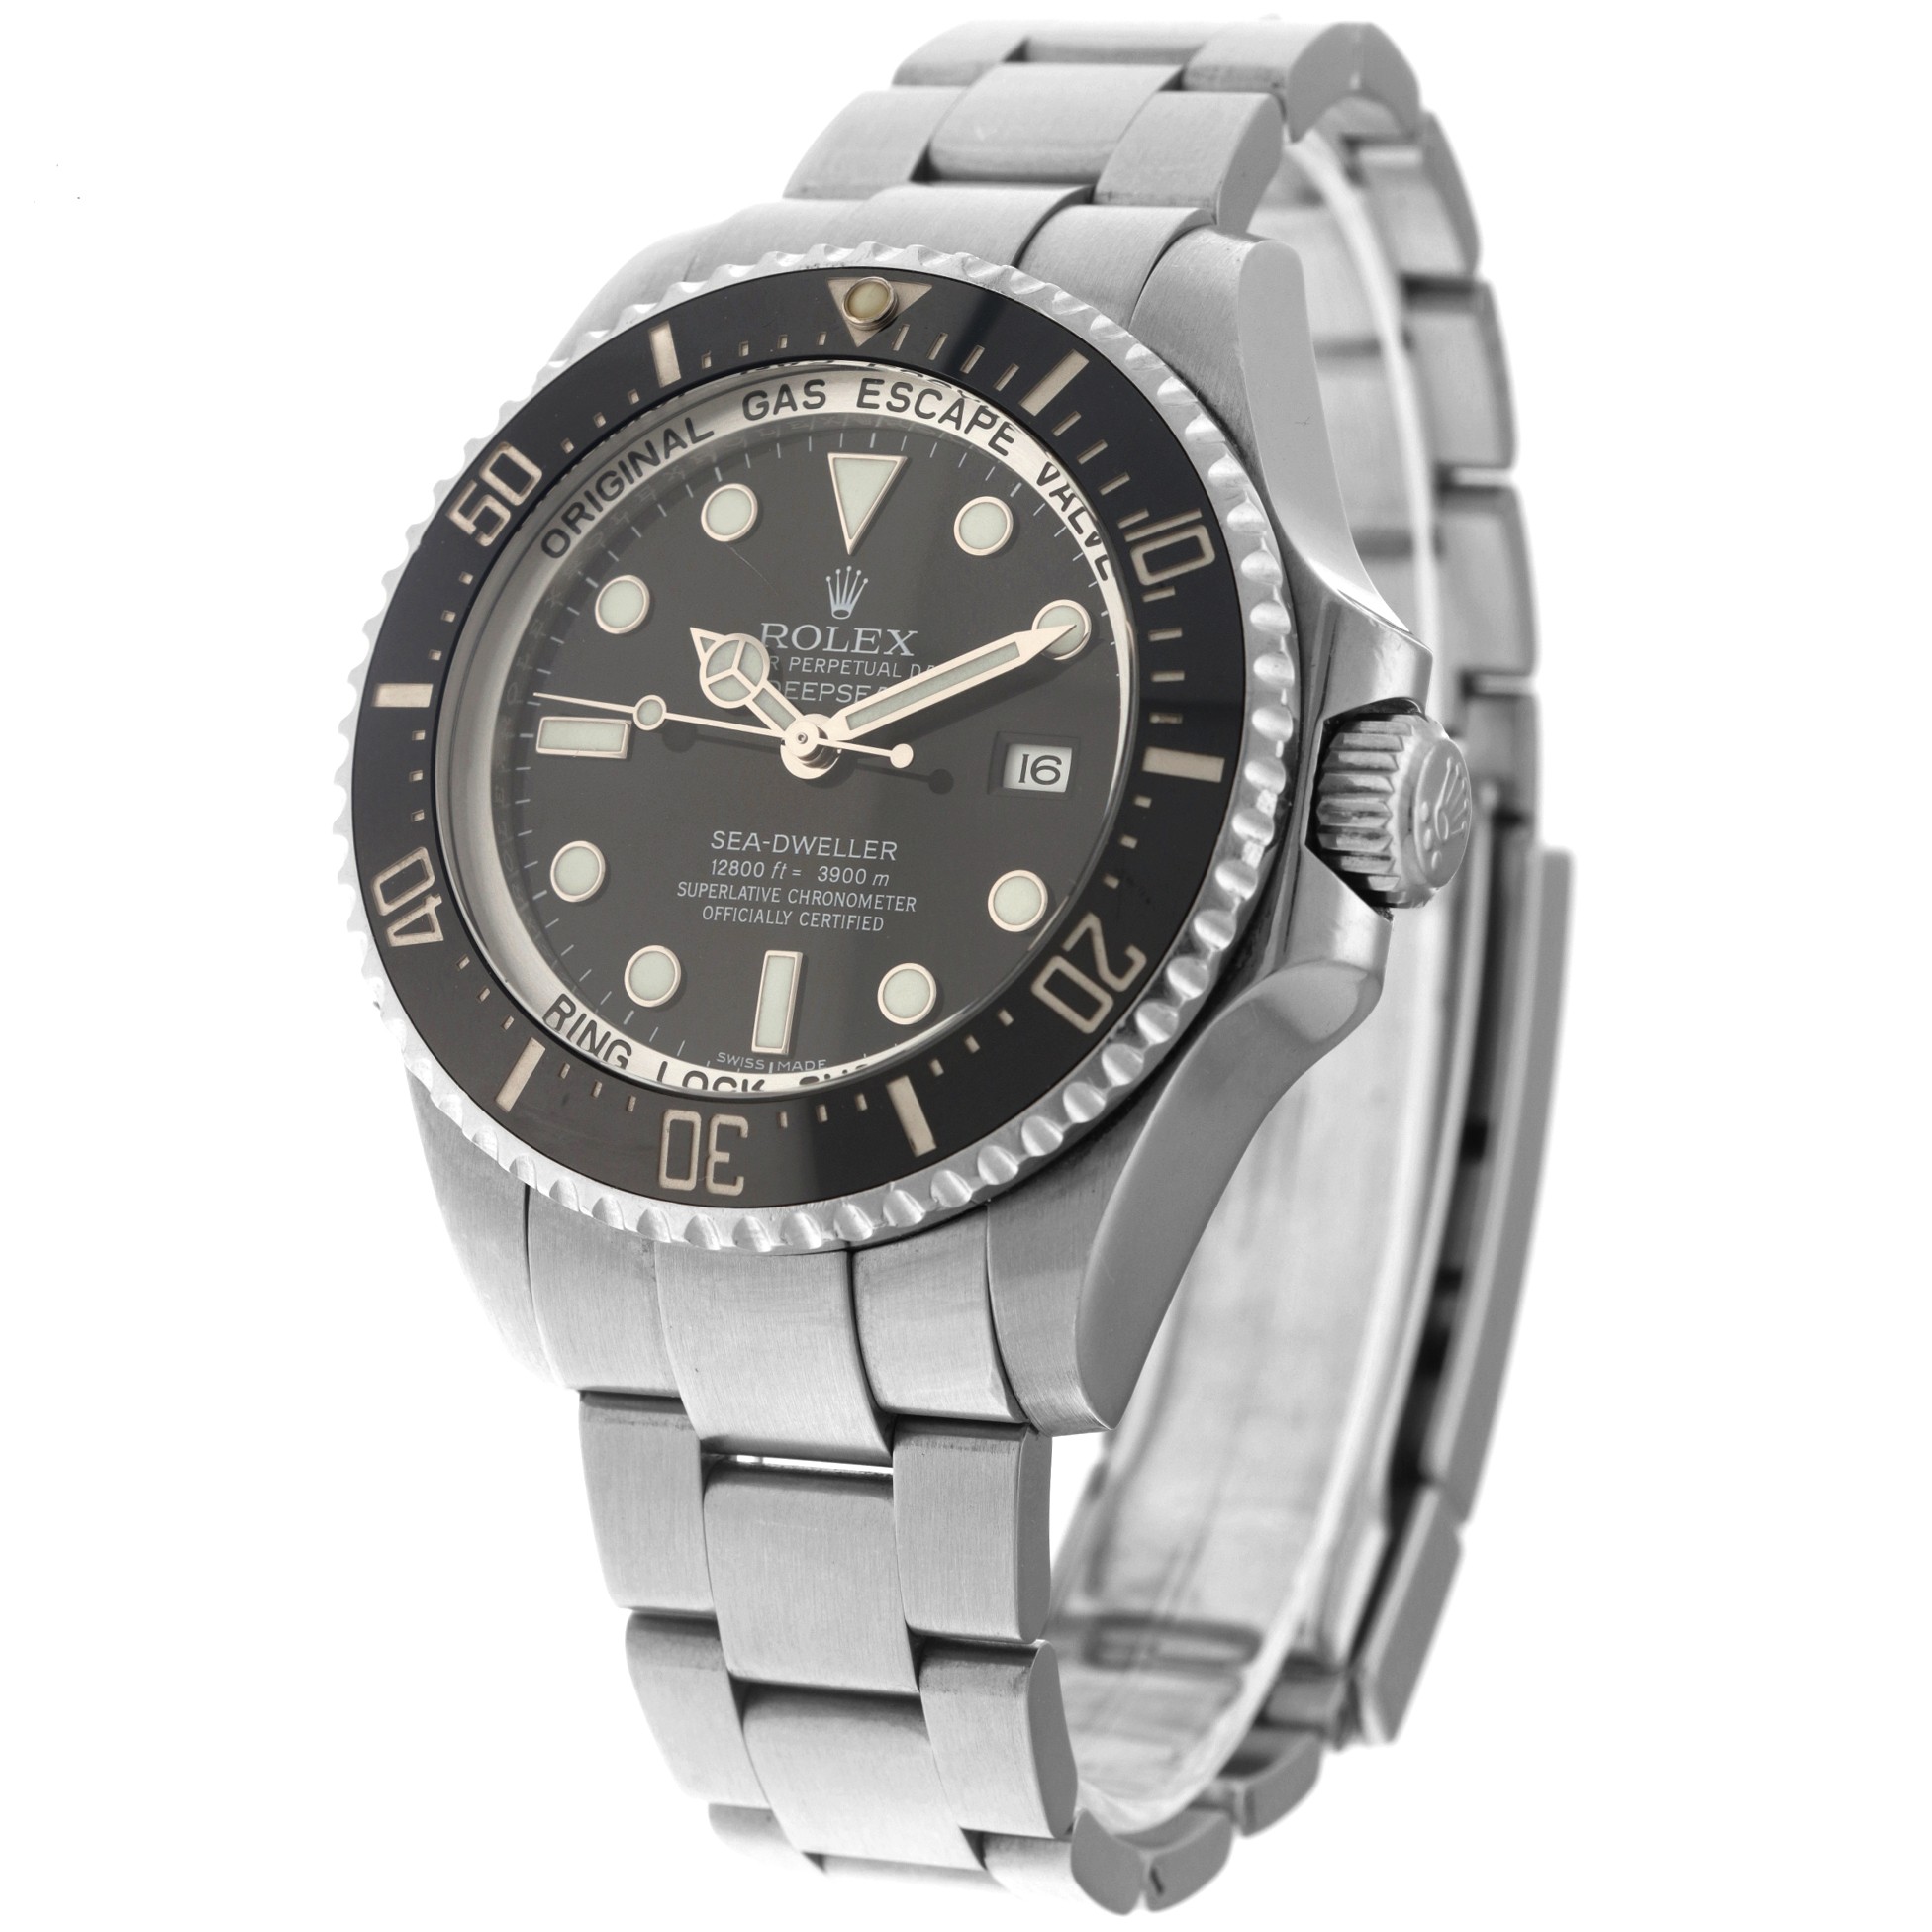 No Reserve - Rolex Sea-Dweller Deepsea 116660 - Men's watch - approx. 1991. - Image 2 of 6